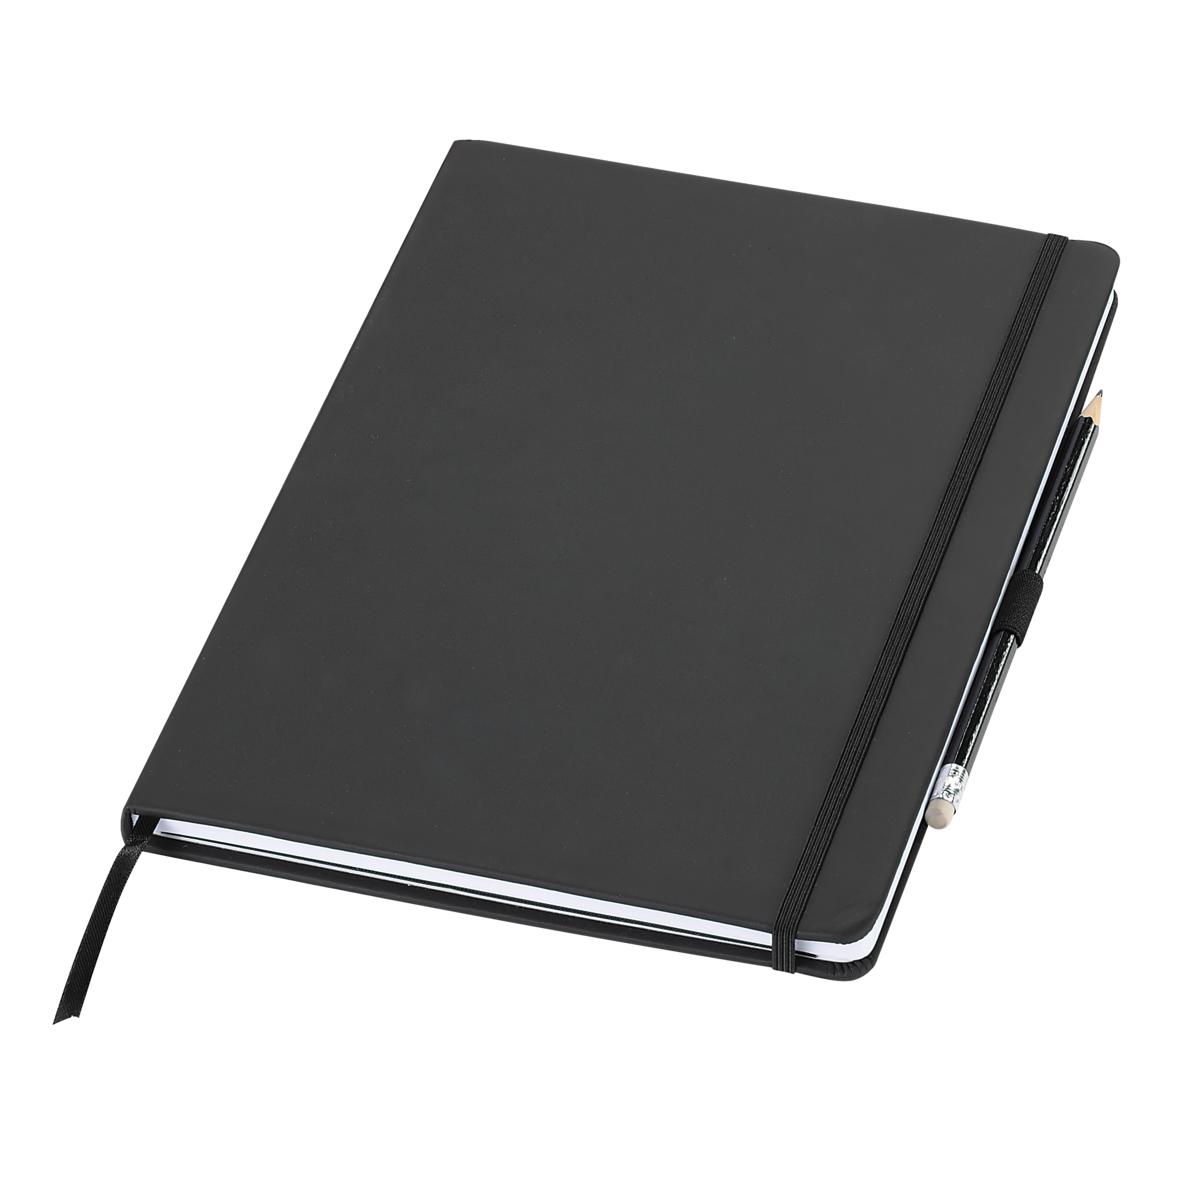 Heerlijk markt modder Notebook "Agenda" A4, black-07093002-00001